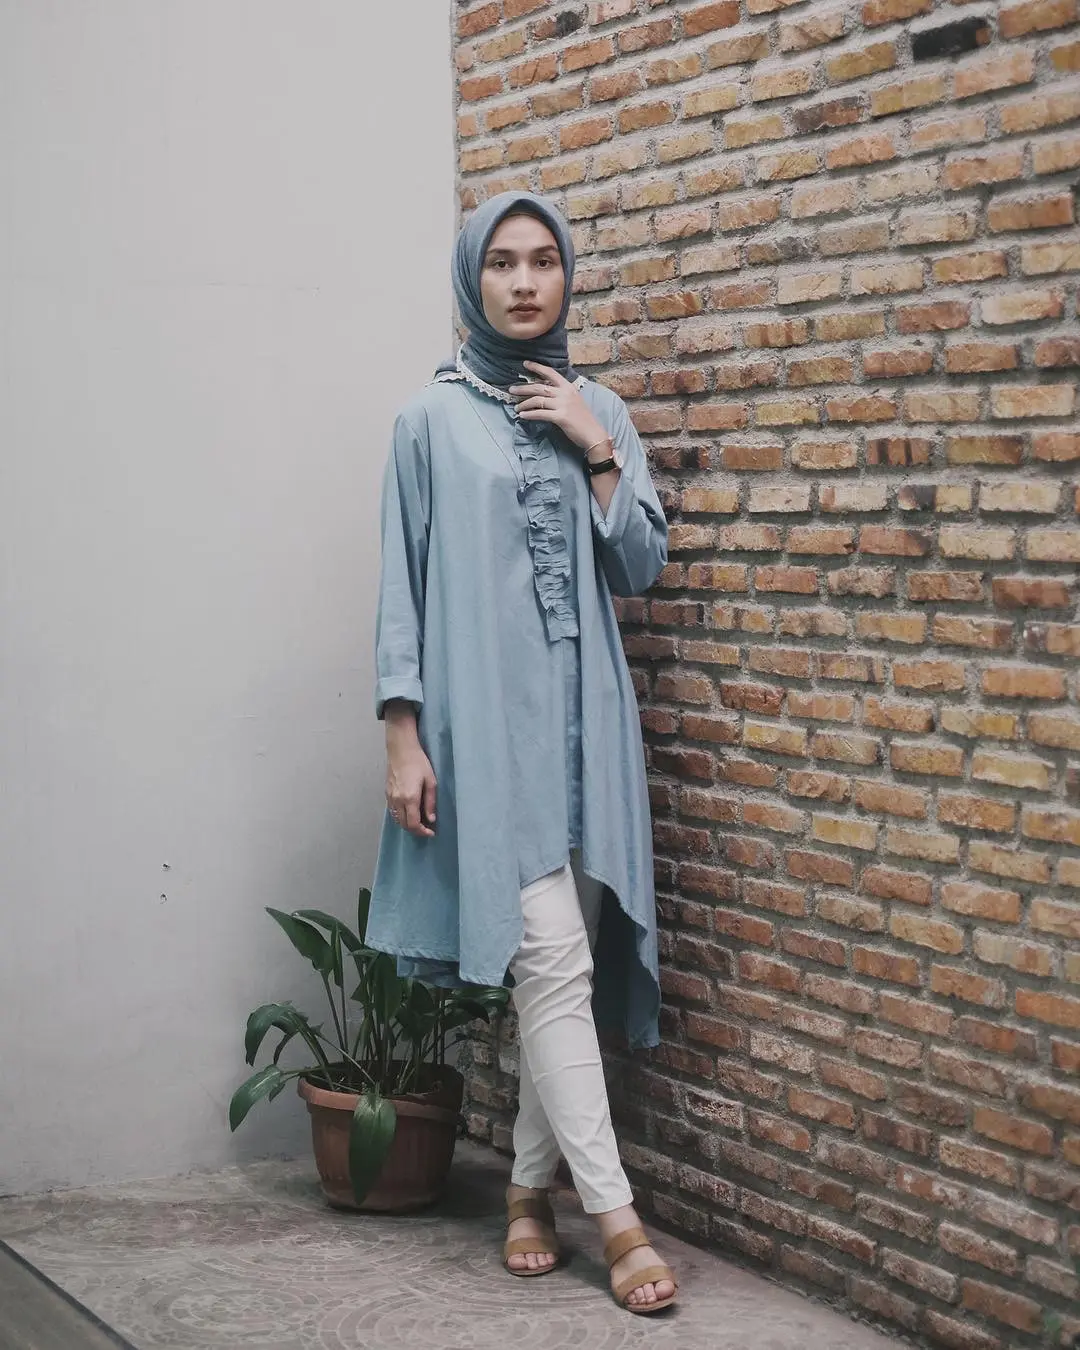 Mix and match busana hijab yang unik dan simple. (sumber foto: @dwihandaanda/instagram)